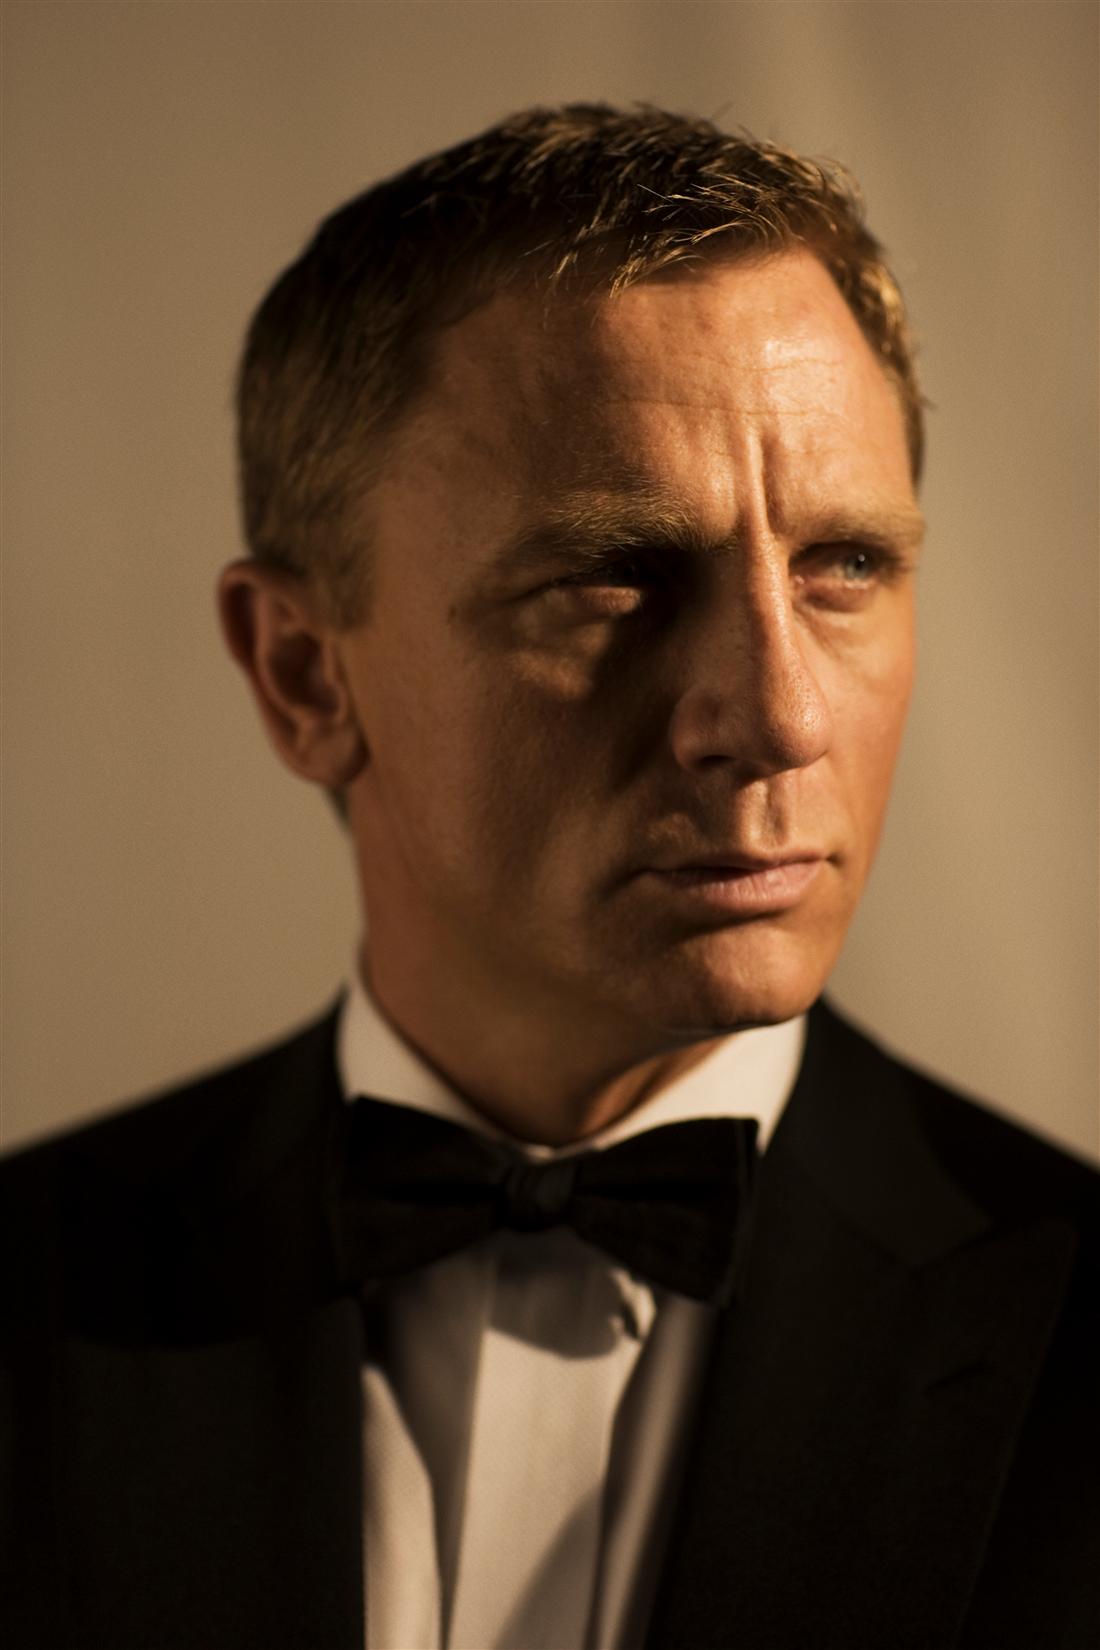 Daniel Craig photo 280 of 774 pics, wallpaper - photo #321016 - ThePlace2